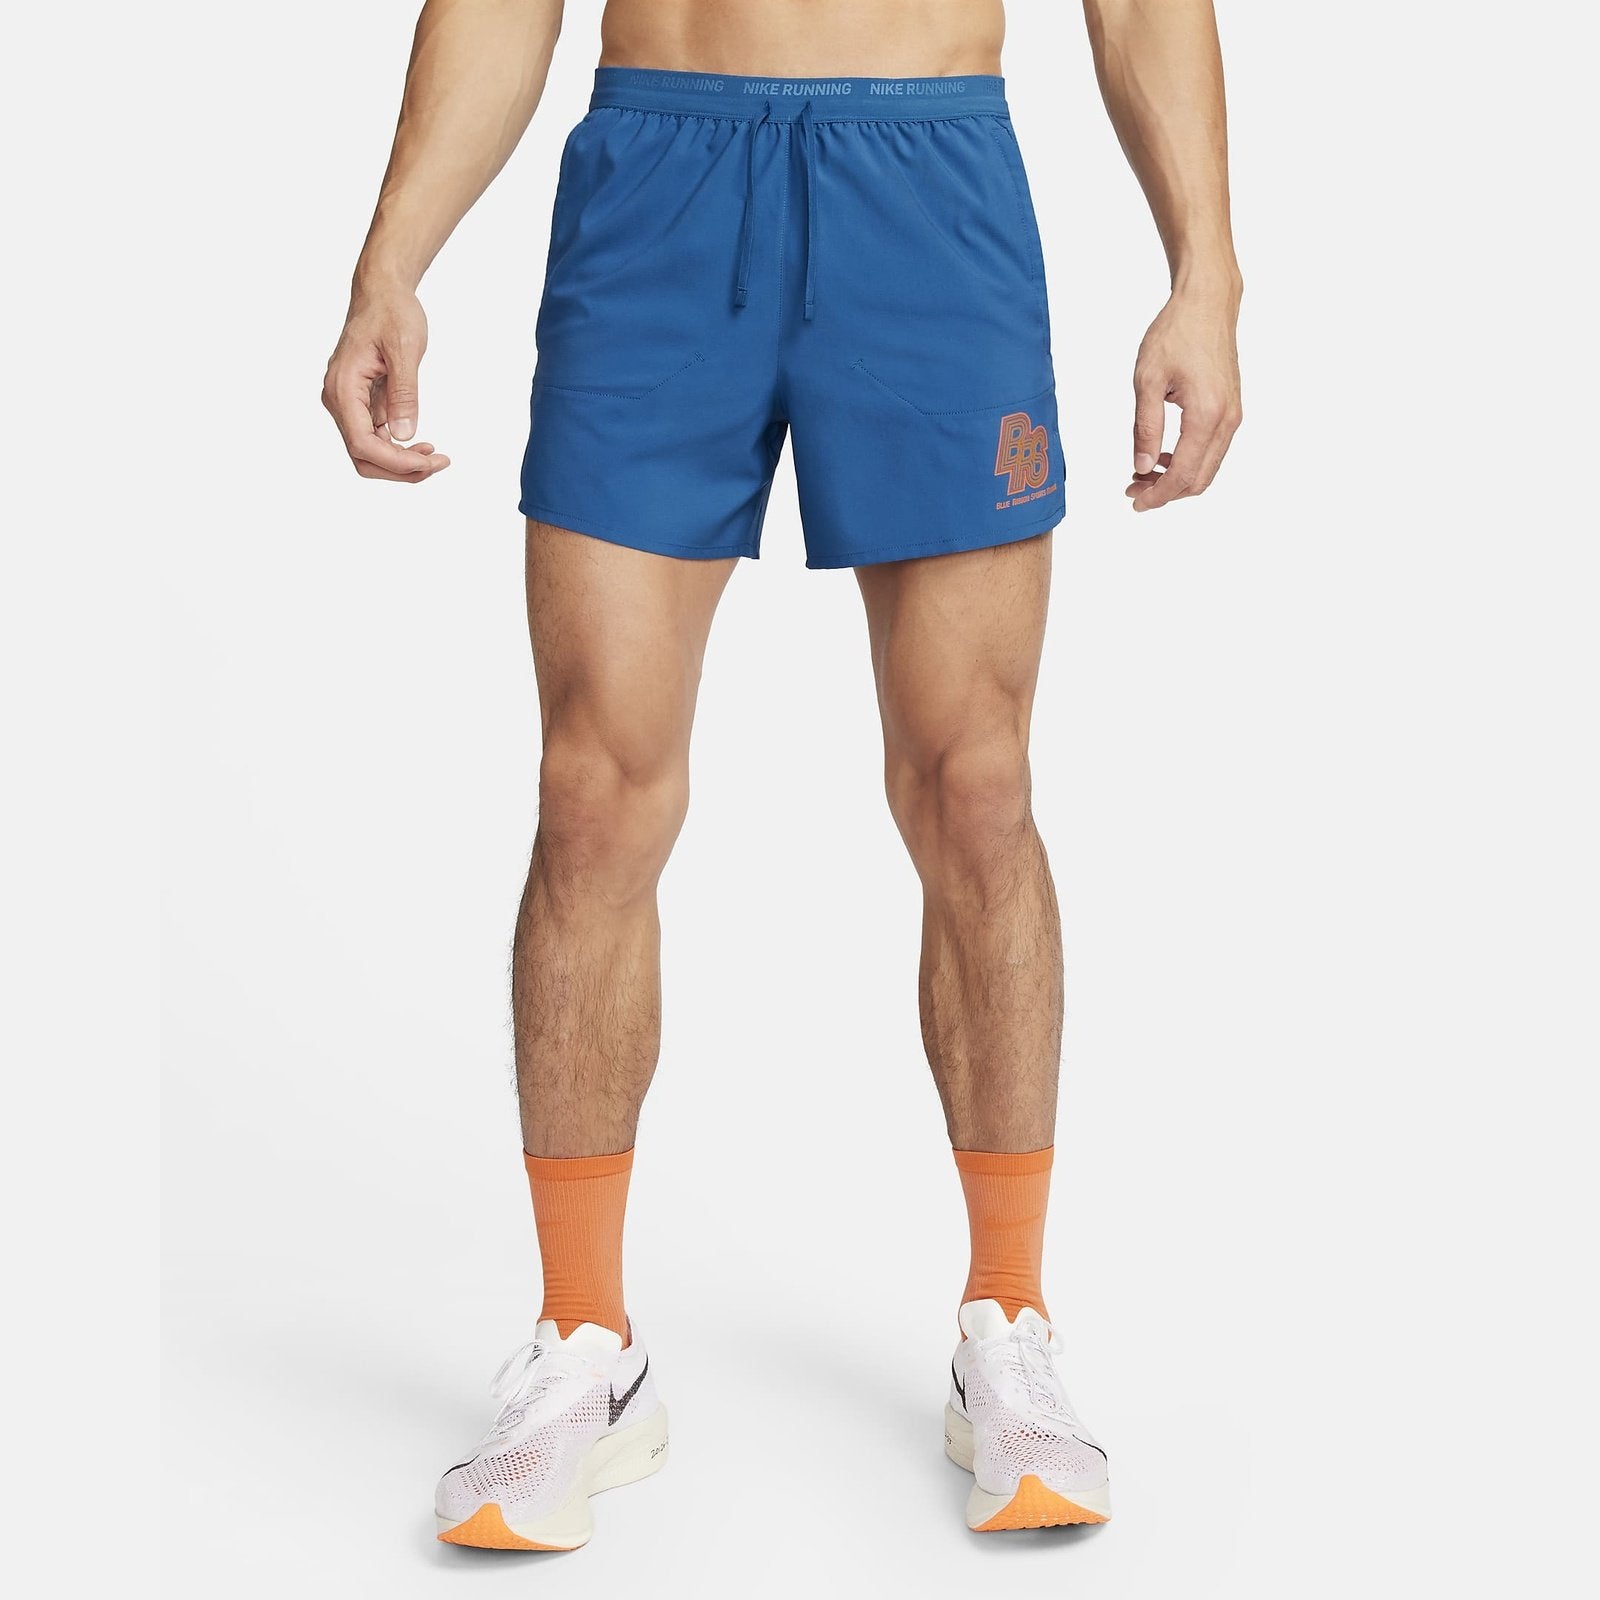 Nike Running Energy Stride 5" Mens APPAREL - Mens Shorts COURT BLUE/SAFETY ORANGE